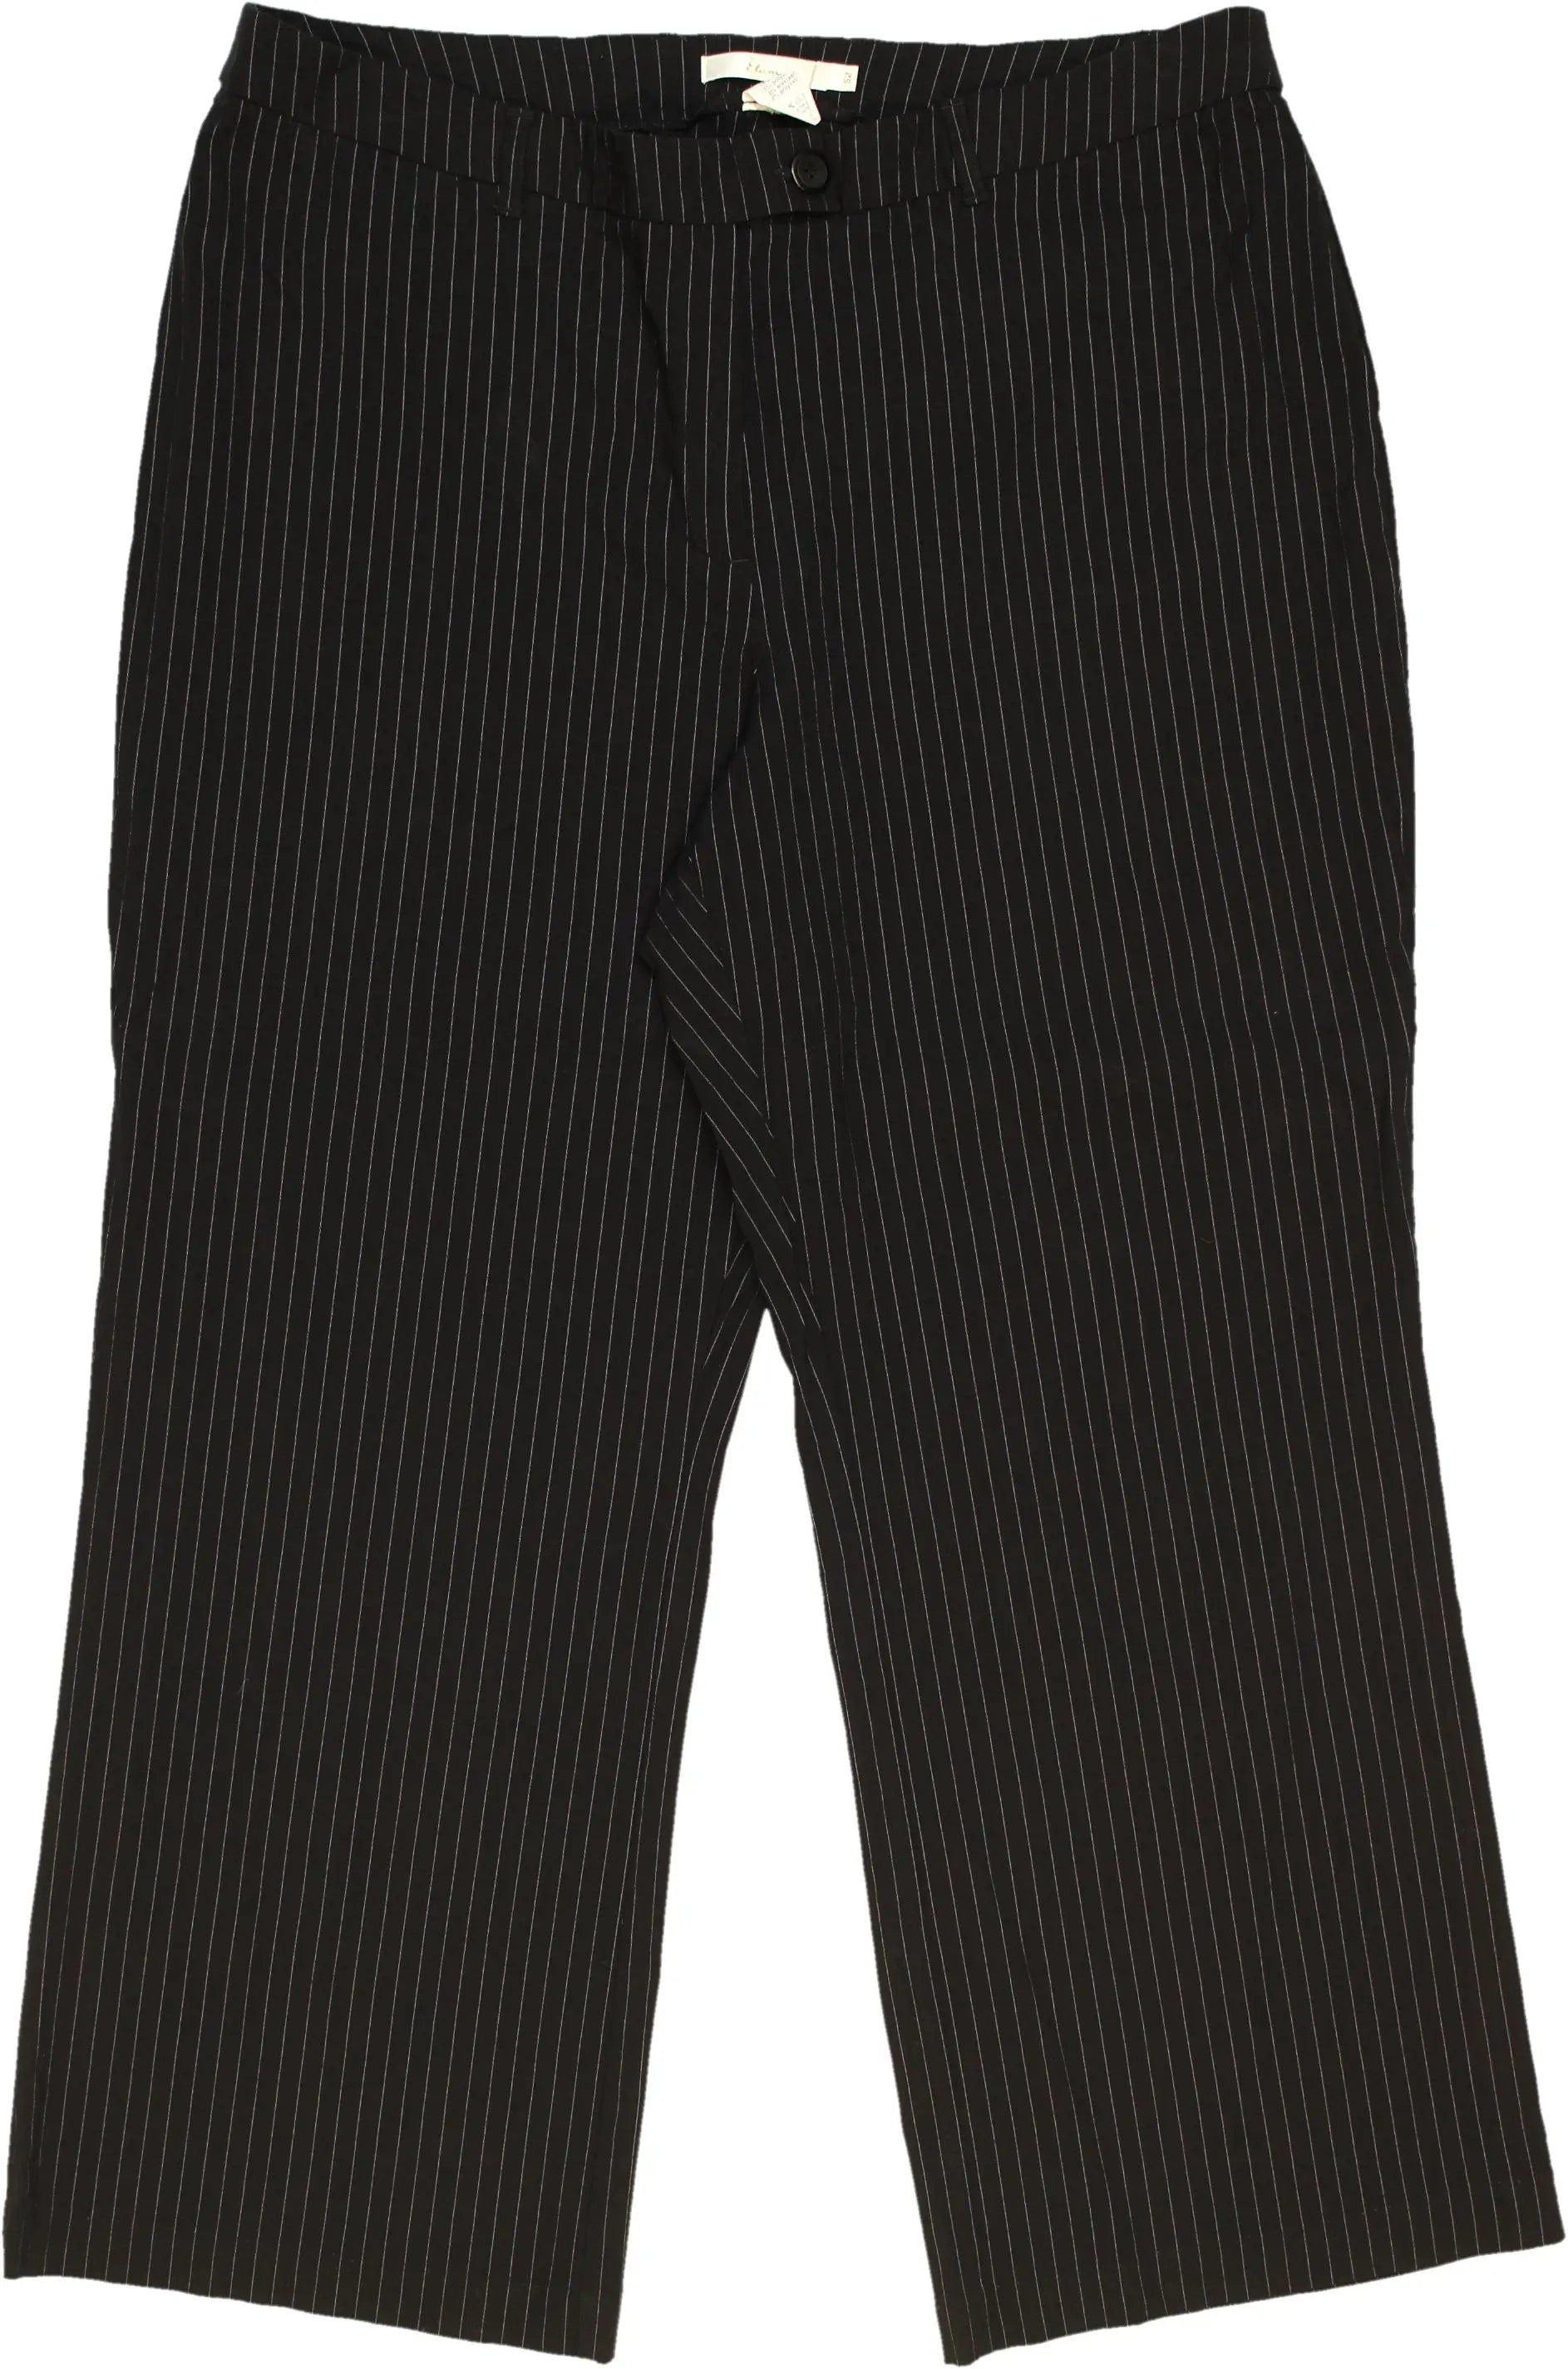 Miss Etam - Striped Pants- ThriftTale.com - Vintage and second handclothing